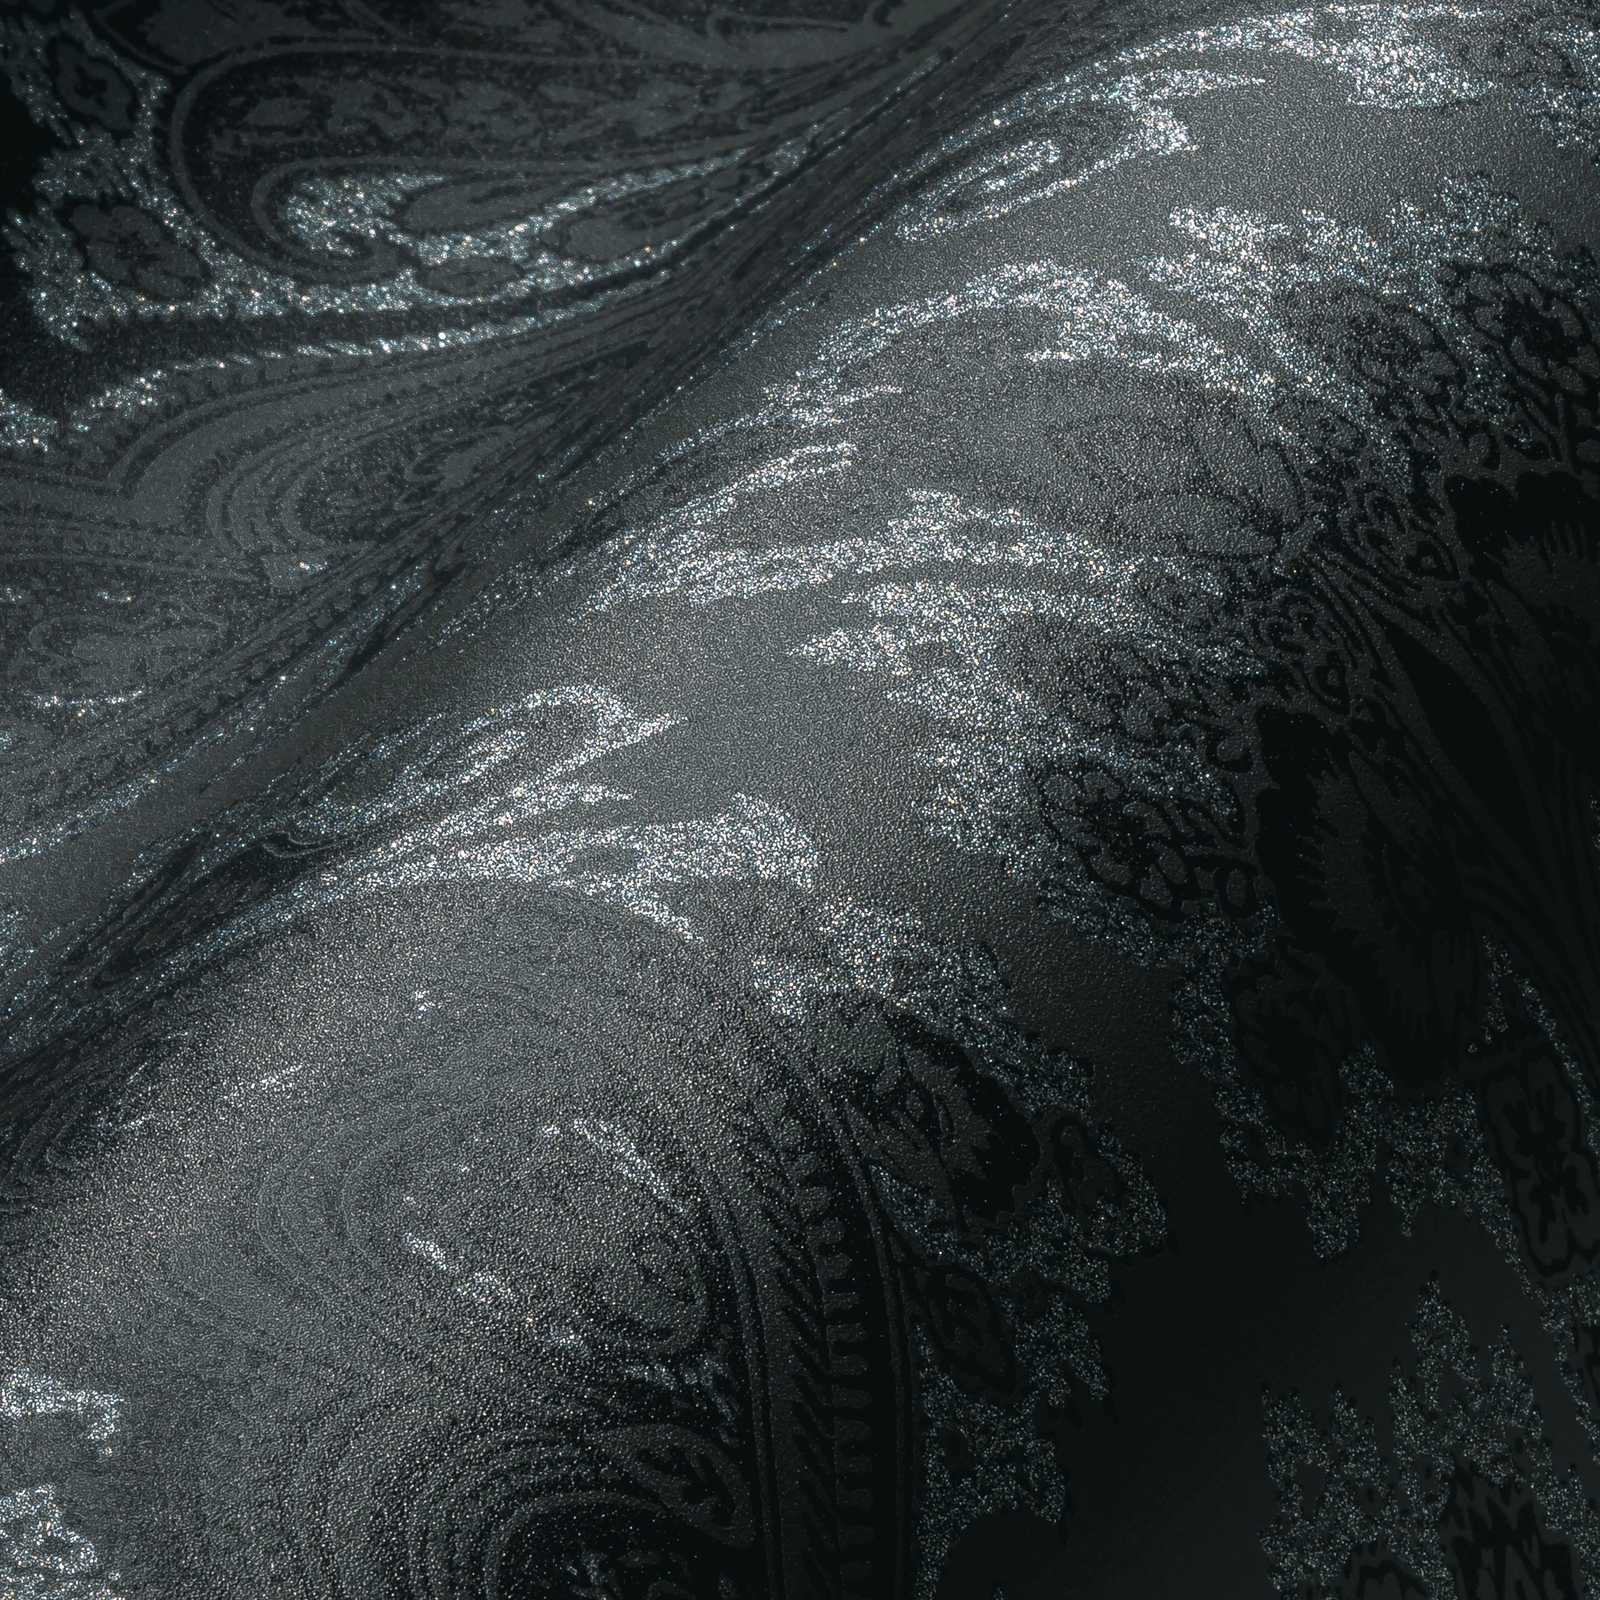             Black wallpaper with ornamental pattern & silver effect - Metallic, Black
        